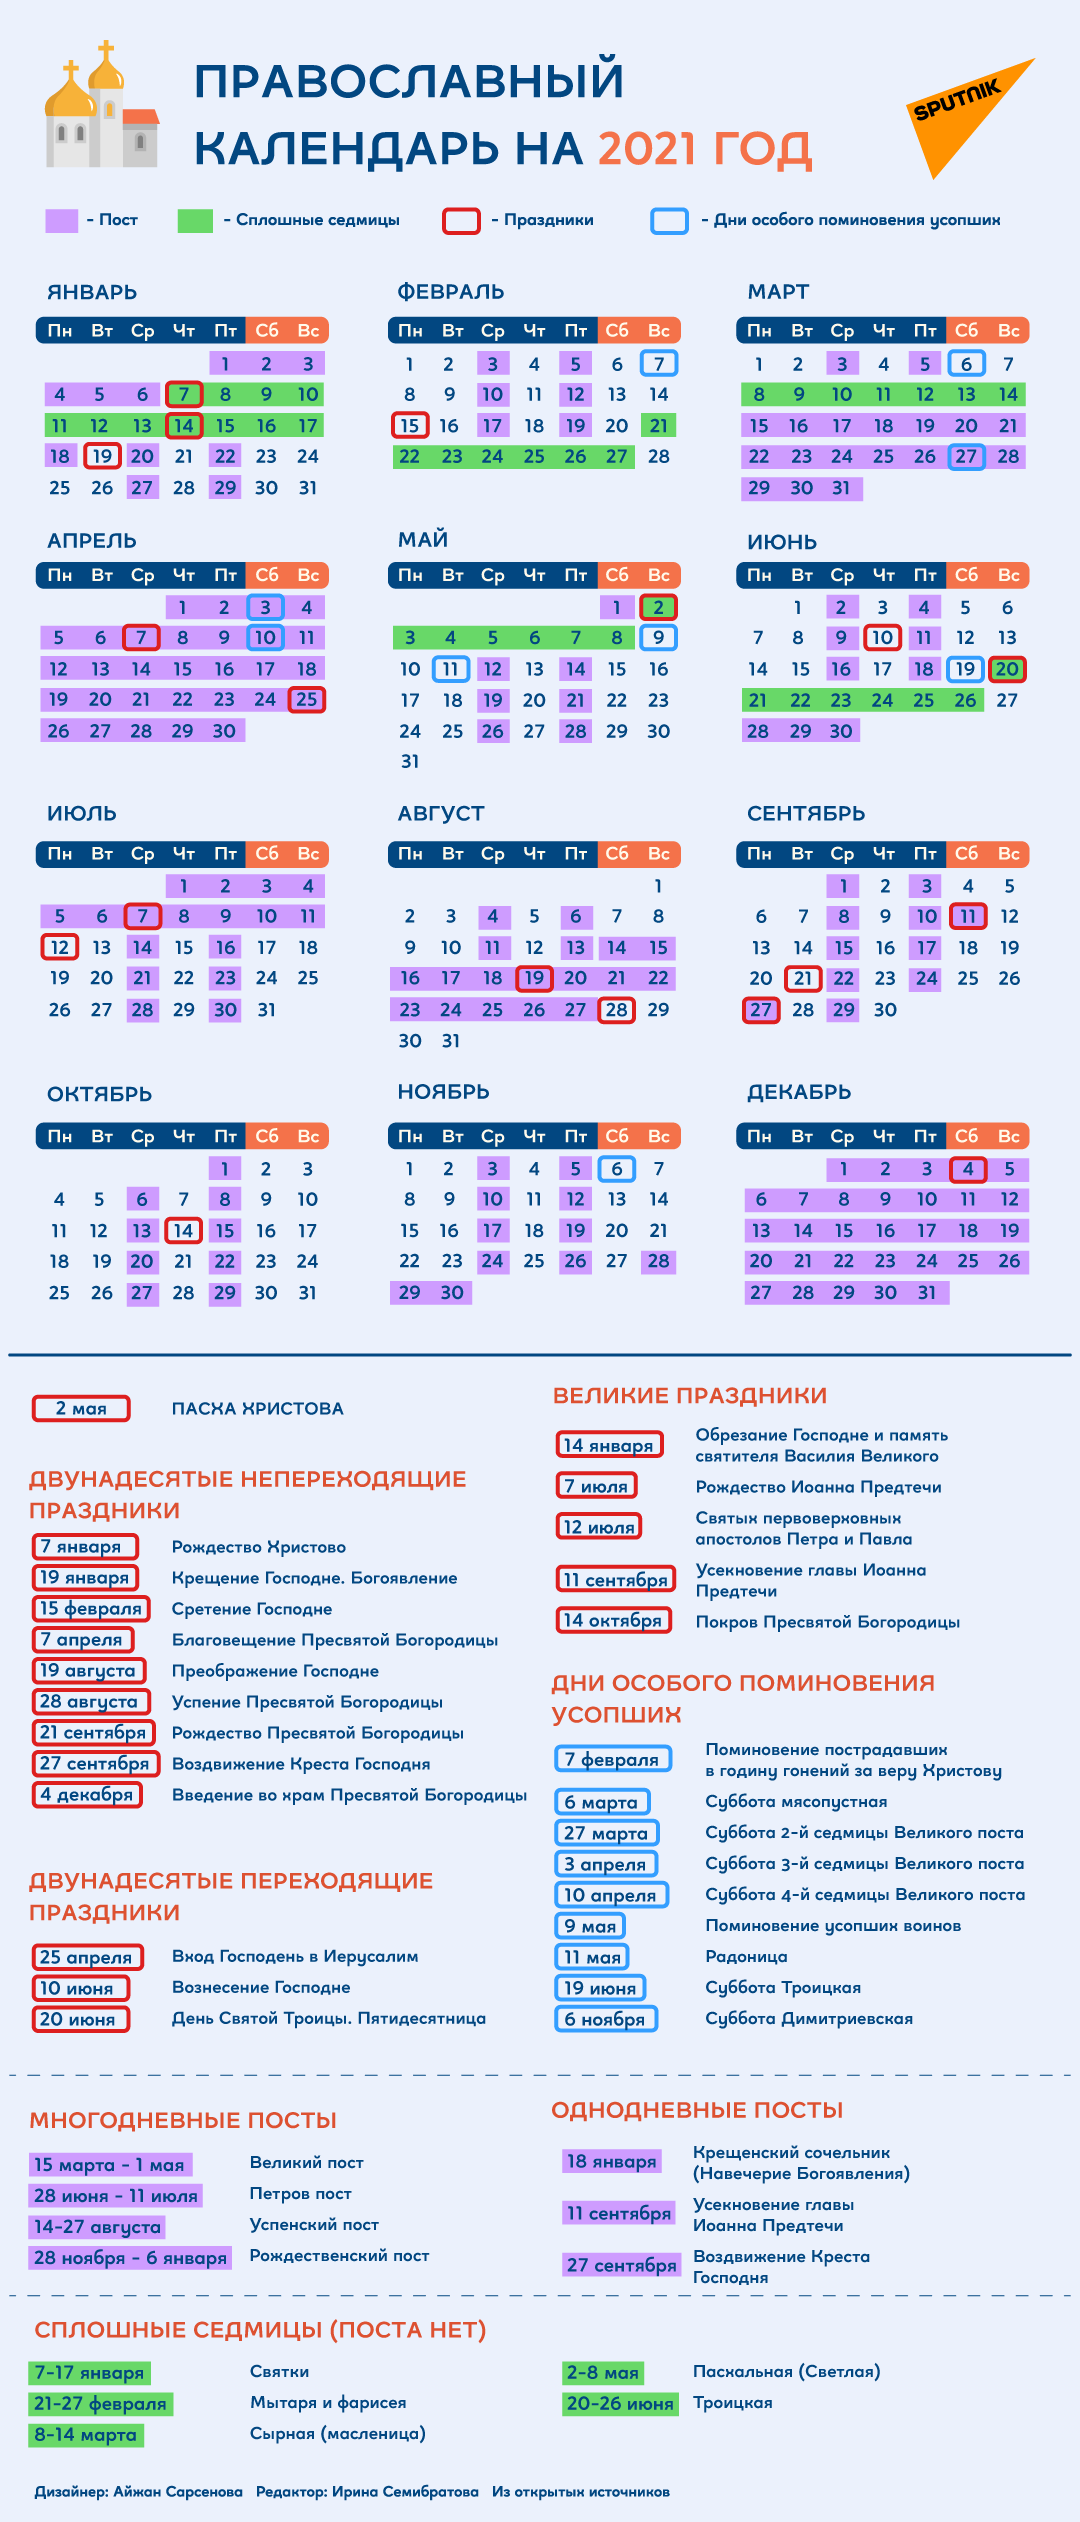 Pravoslavnyj Kalendar 2021